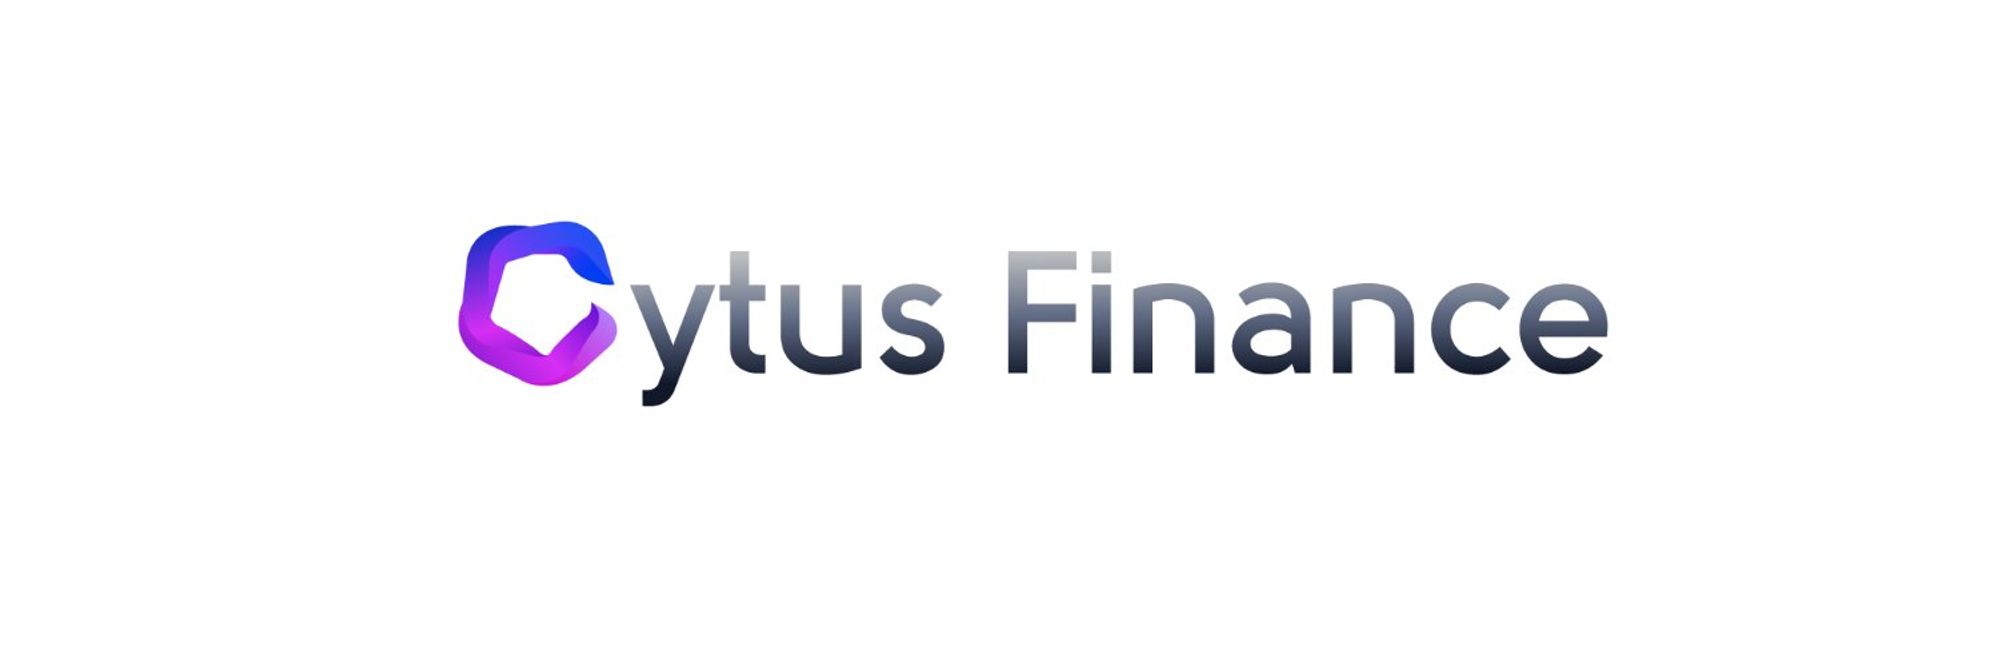 Cytus Finance